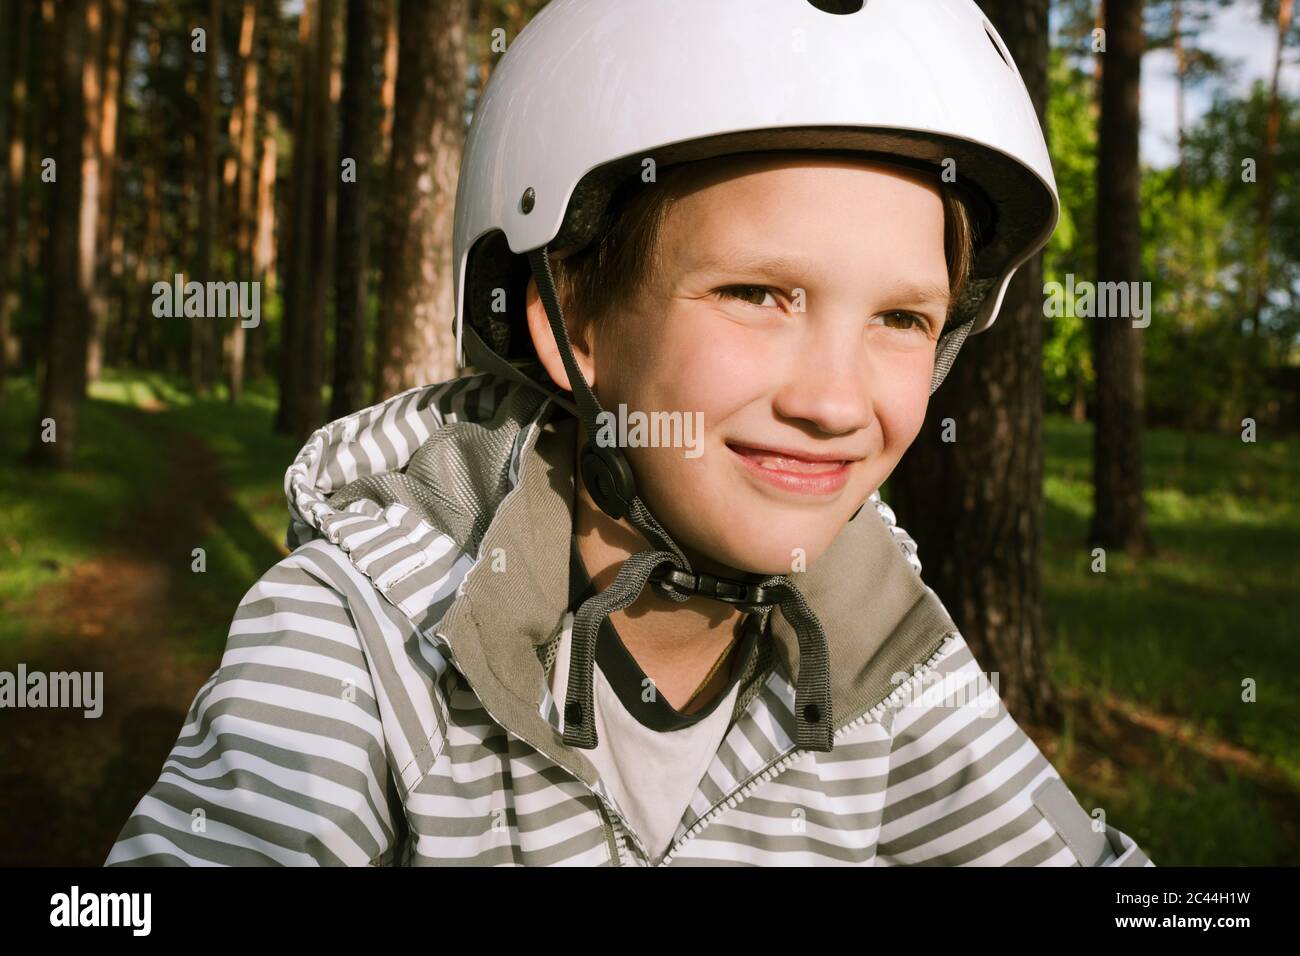 Happy boy wearing cycling helmet in forest Stock Photo